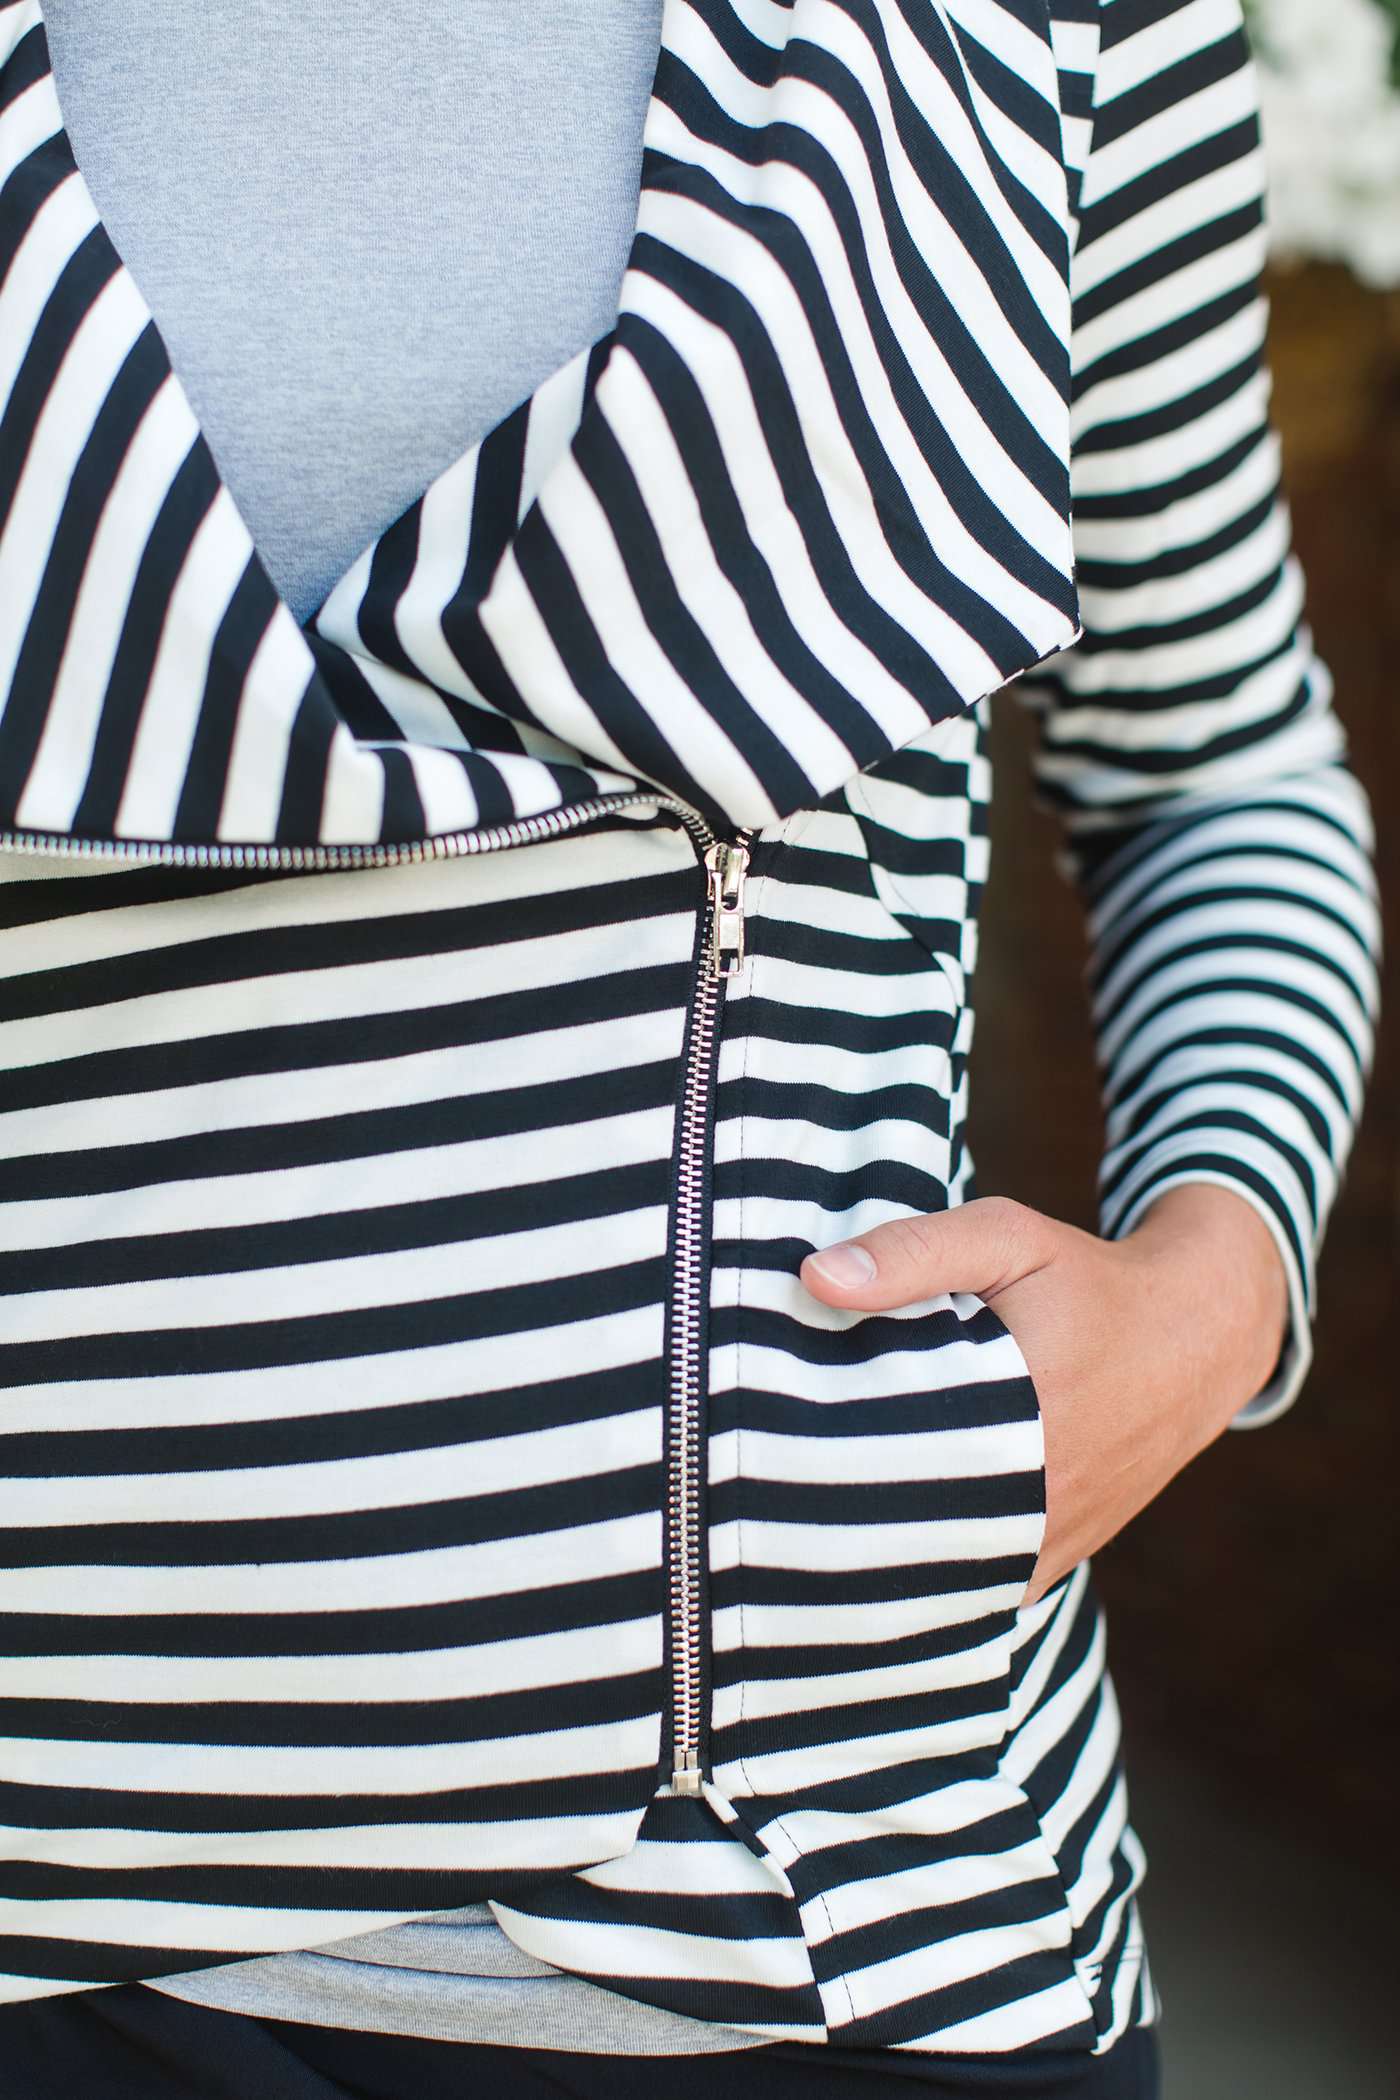 Striped Zipper Cardigan - FINAL SALE Layering Essentials